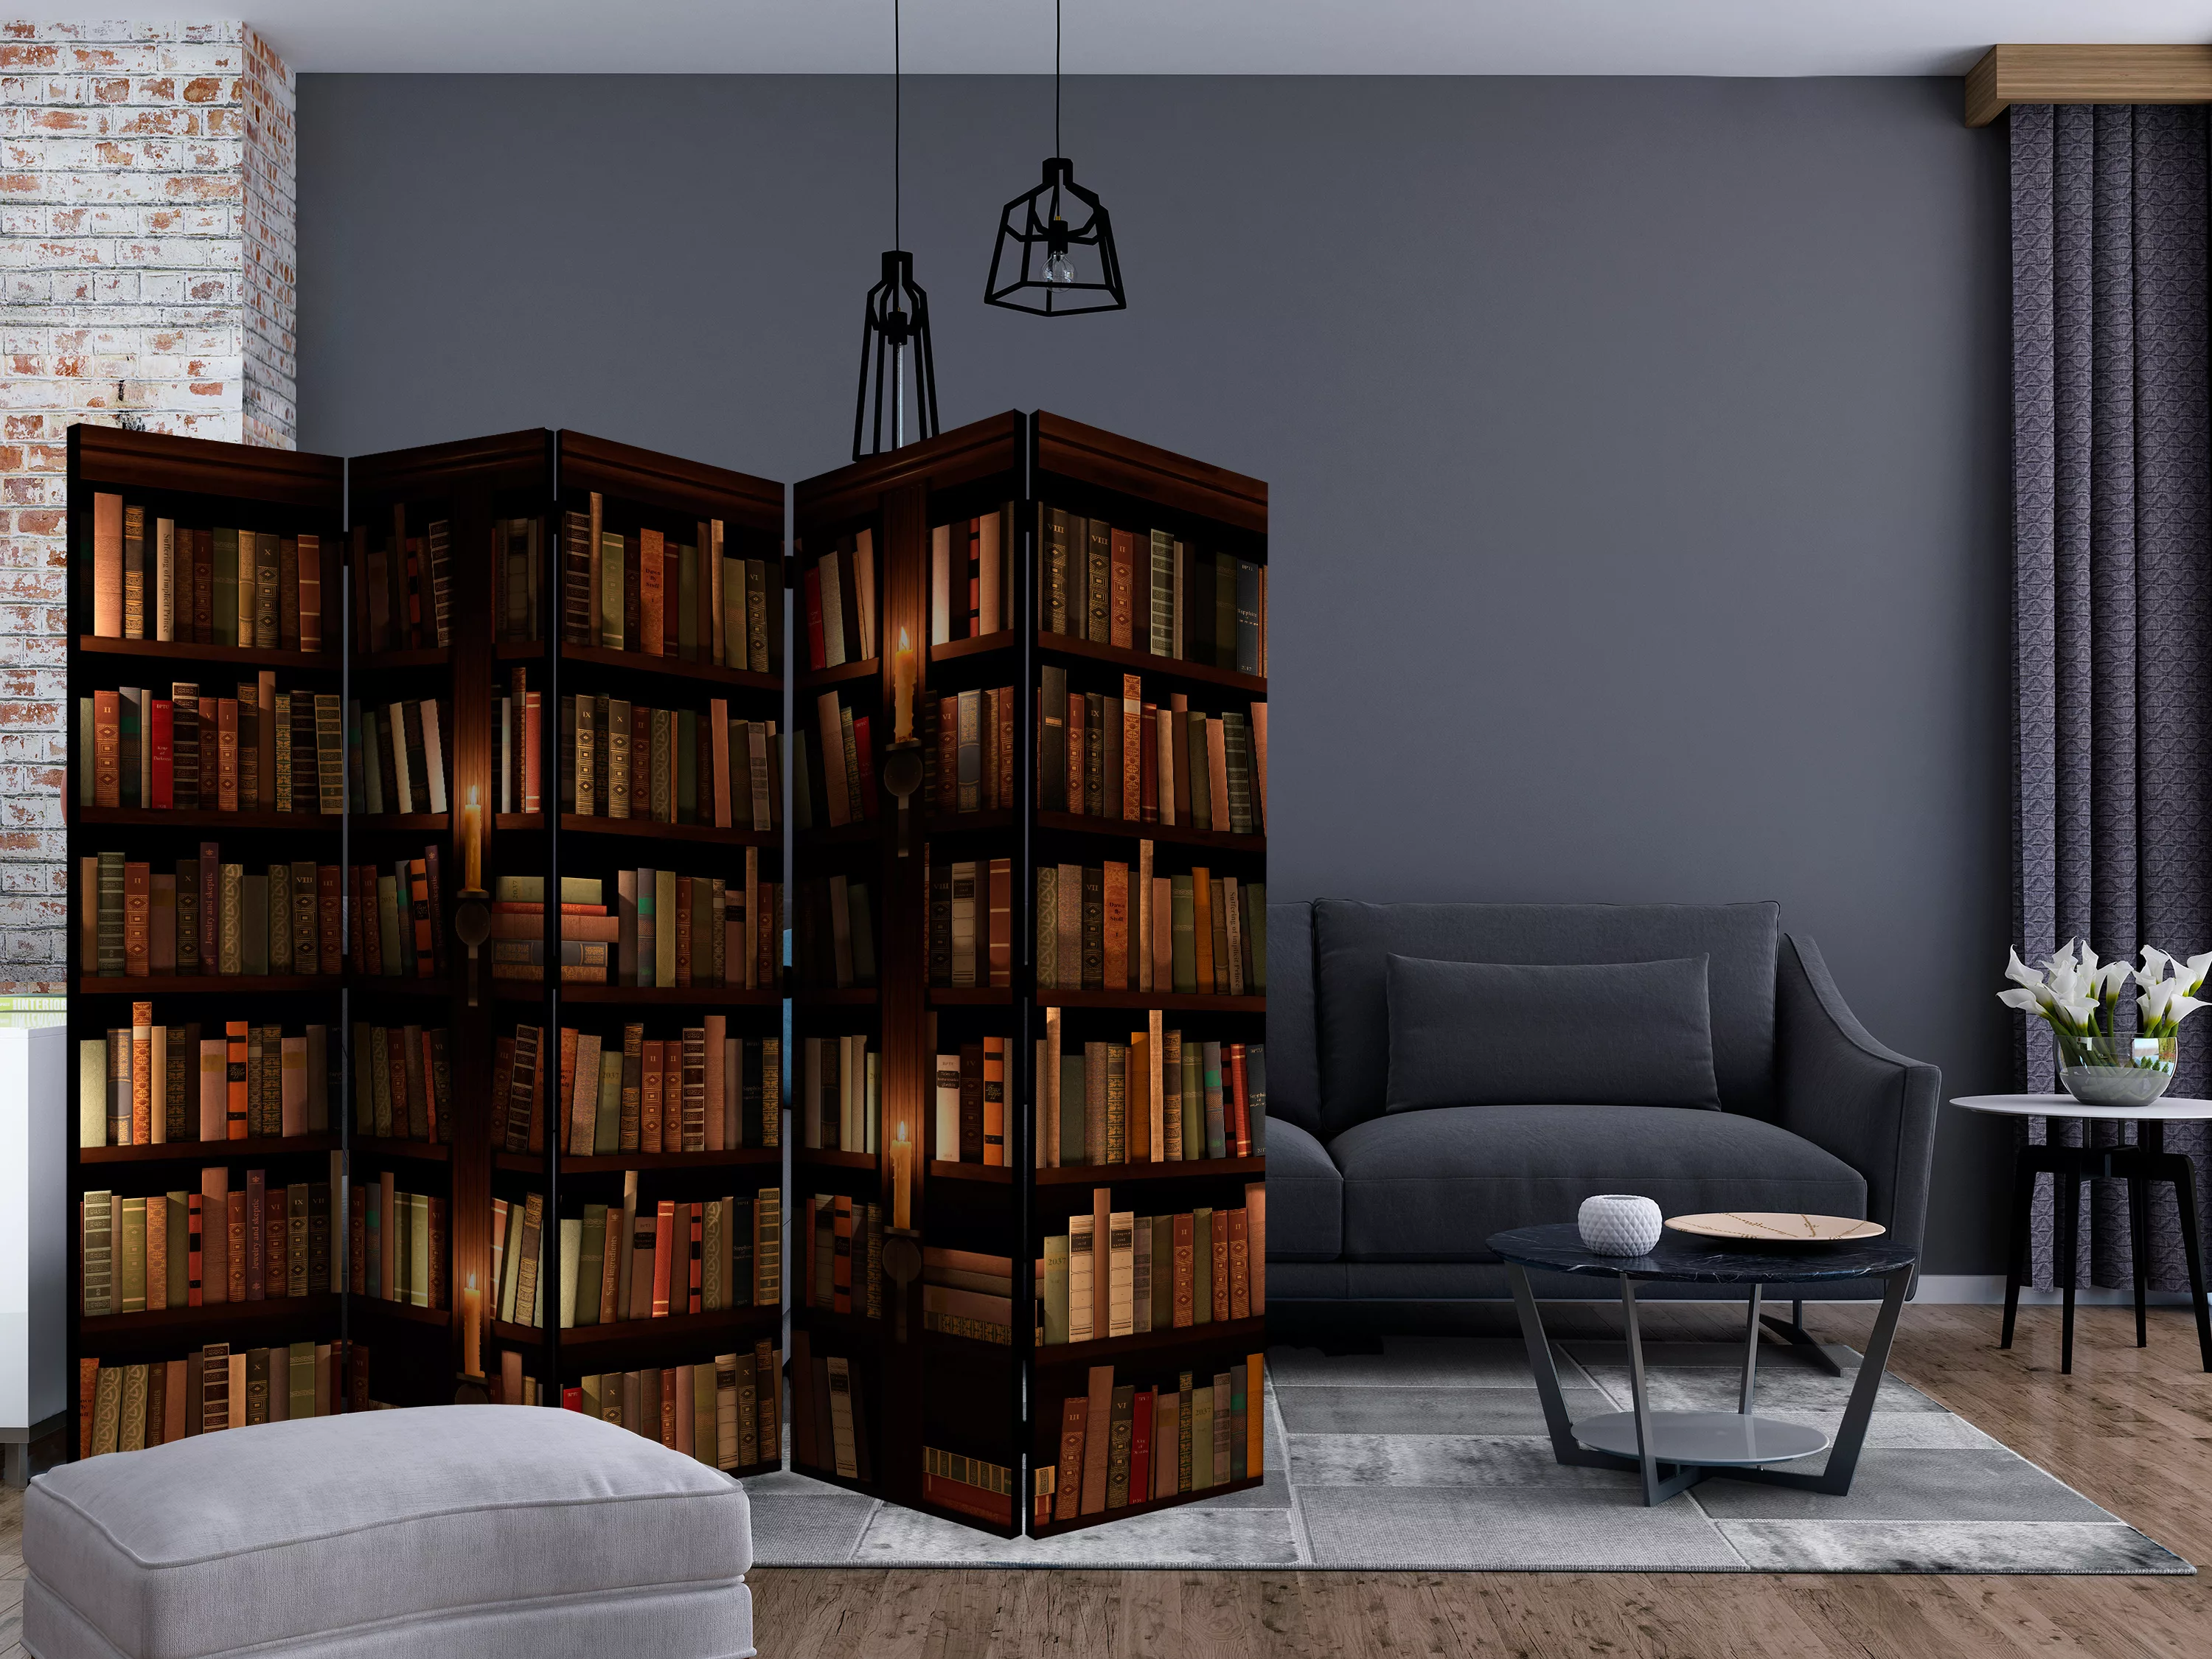 5-teiliges Paravent - Bookshelves Ii [room Dividers] günstig online kaufen